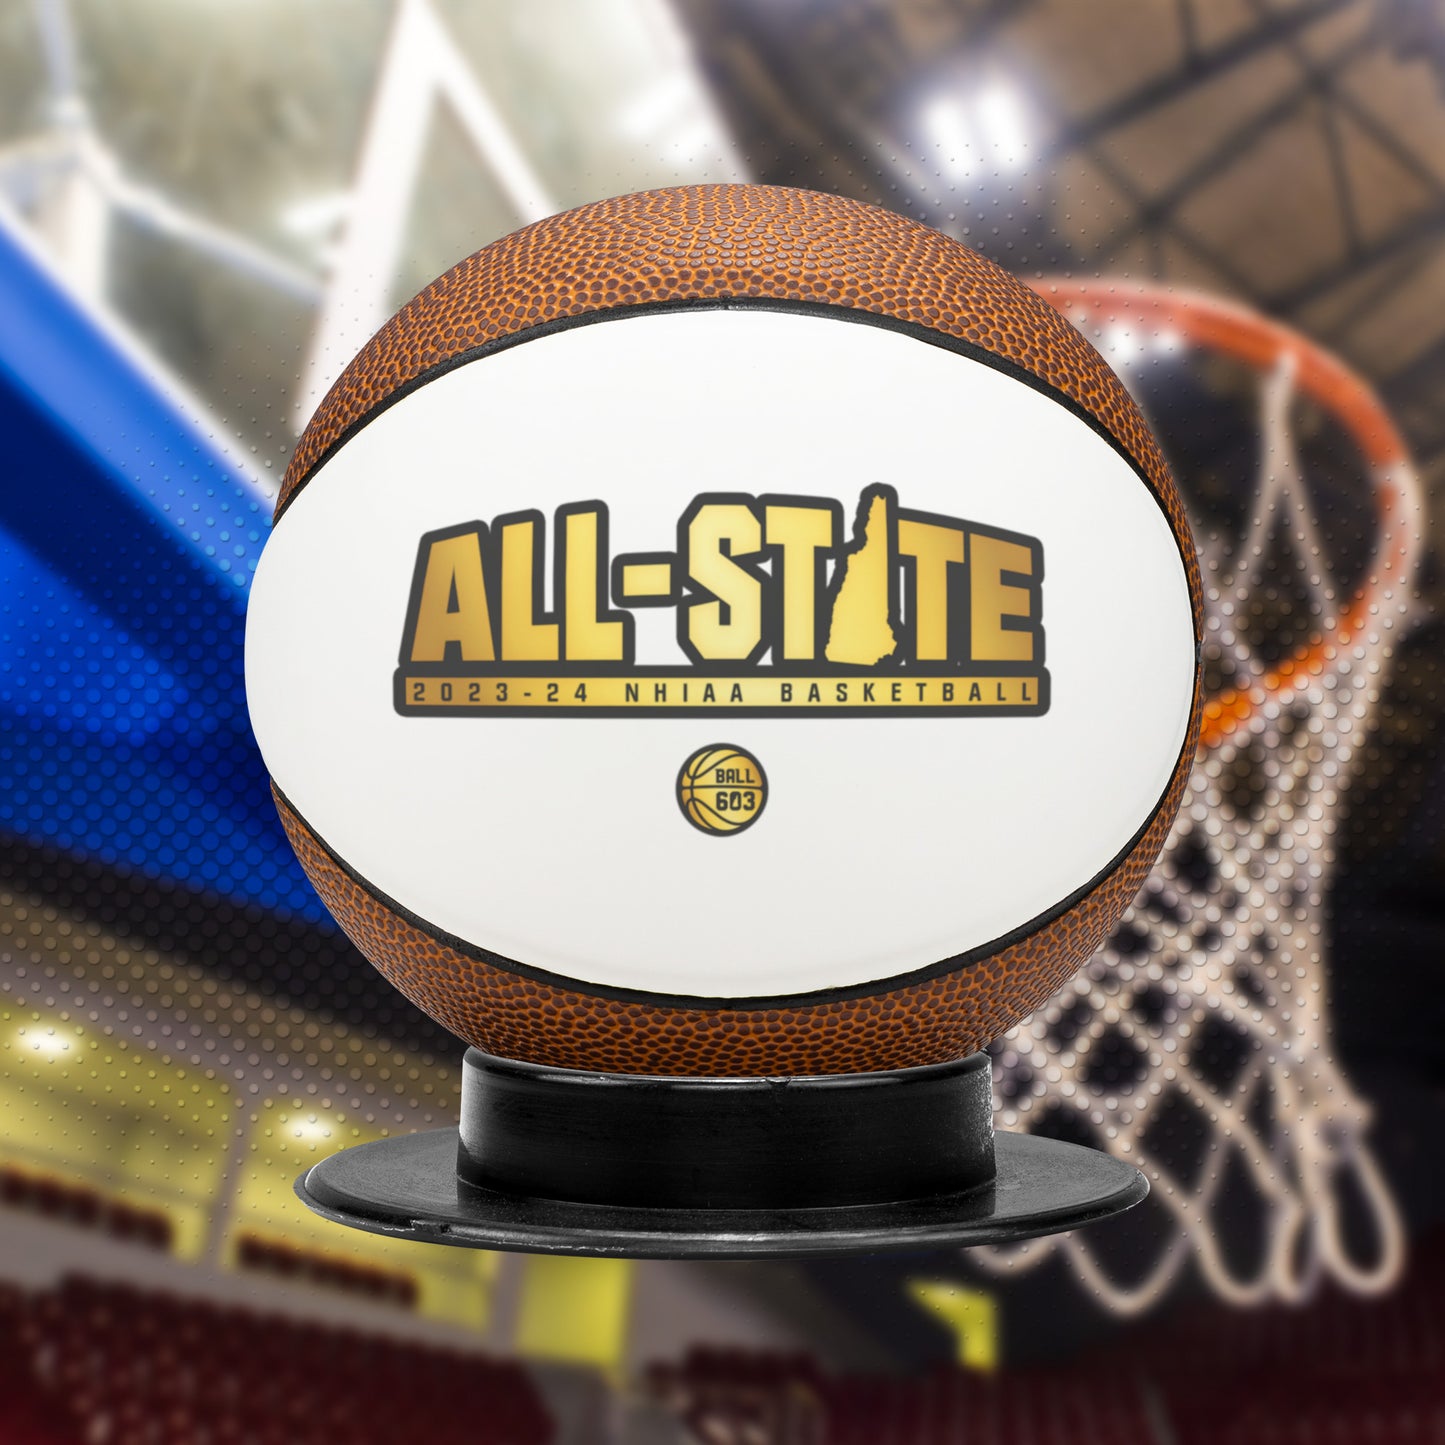 2024 All-State: Mini Basketball